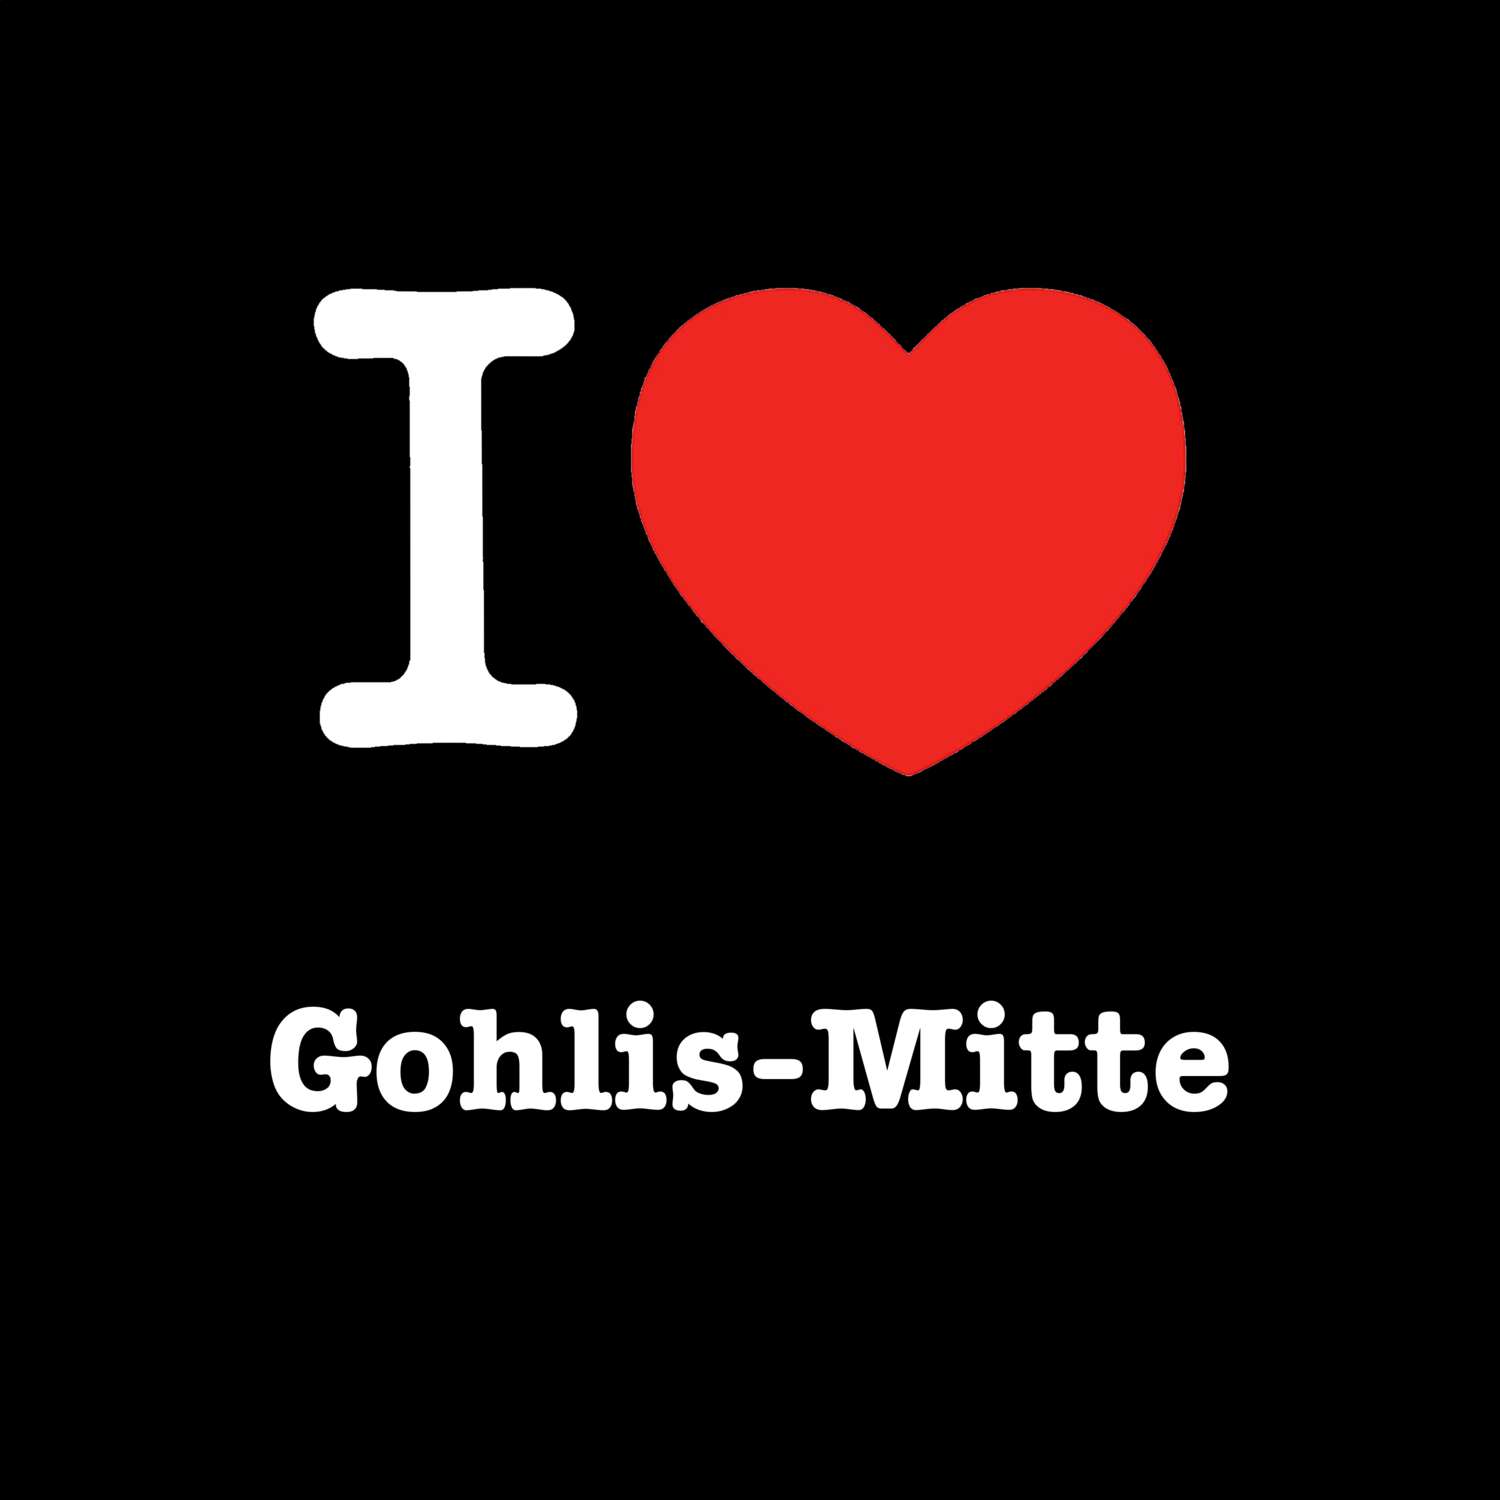 Gohlis-Mitte T-Shirt »I love«